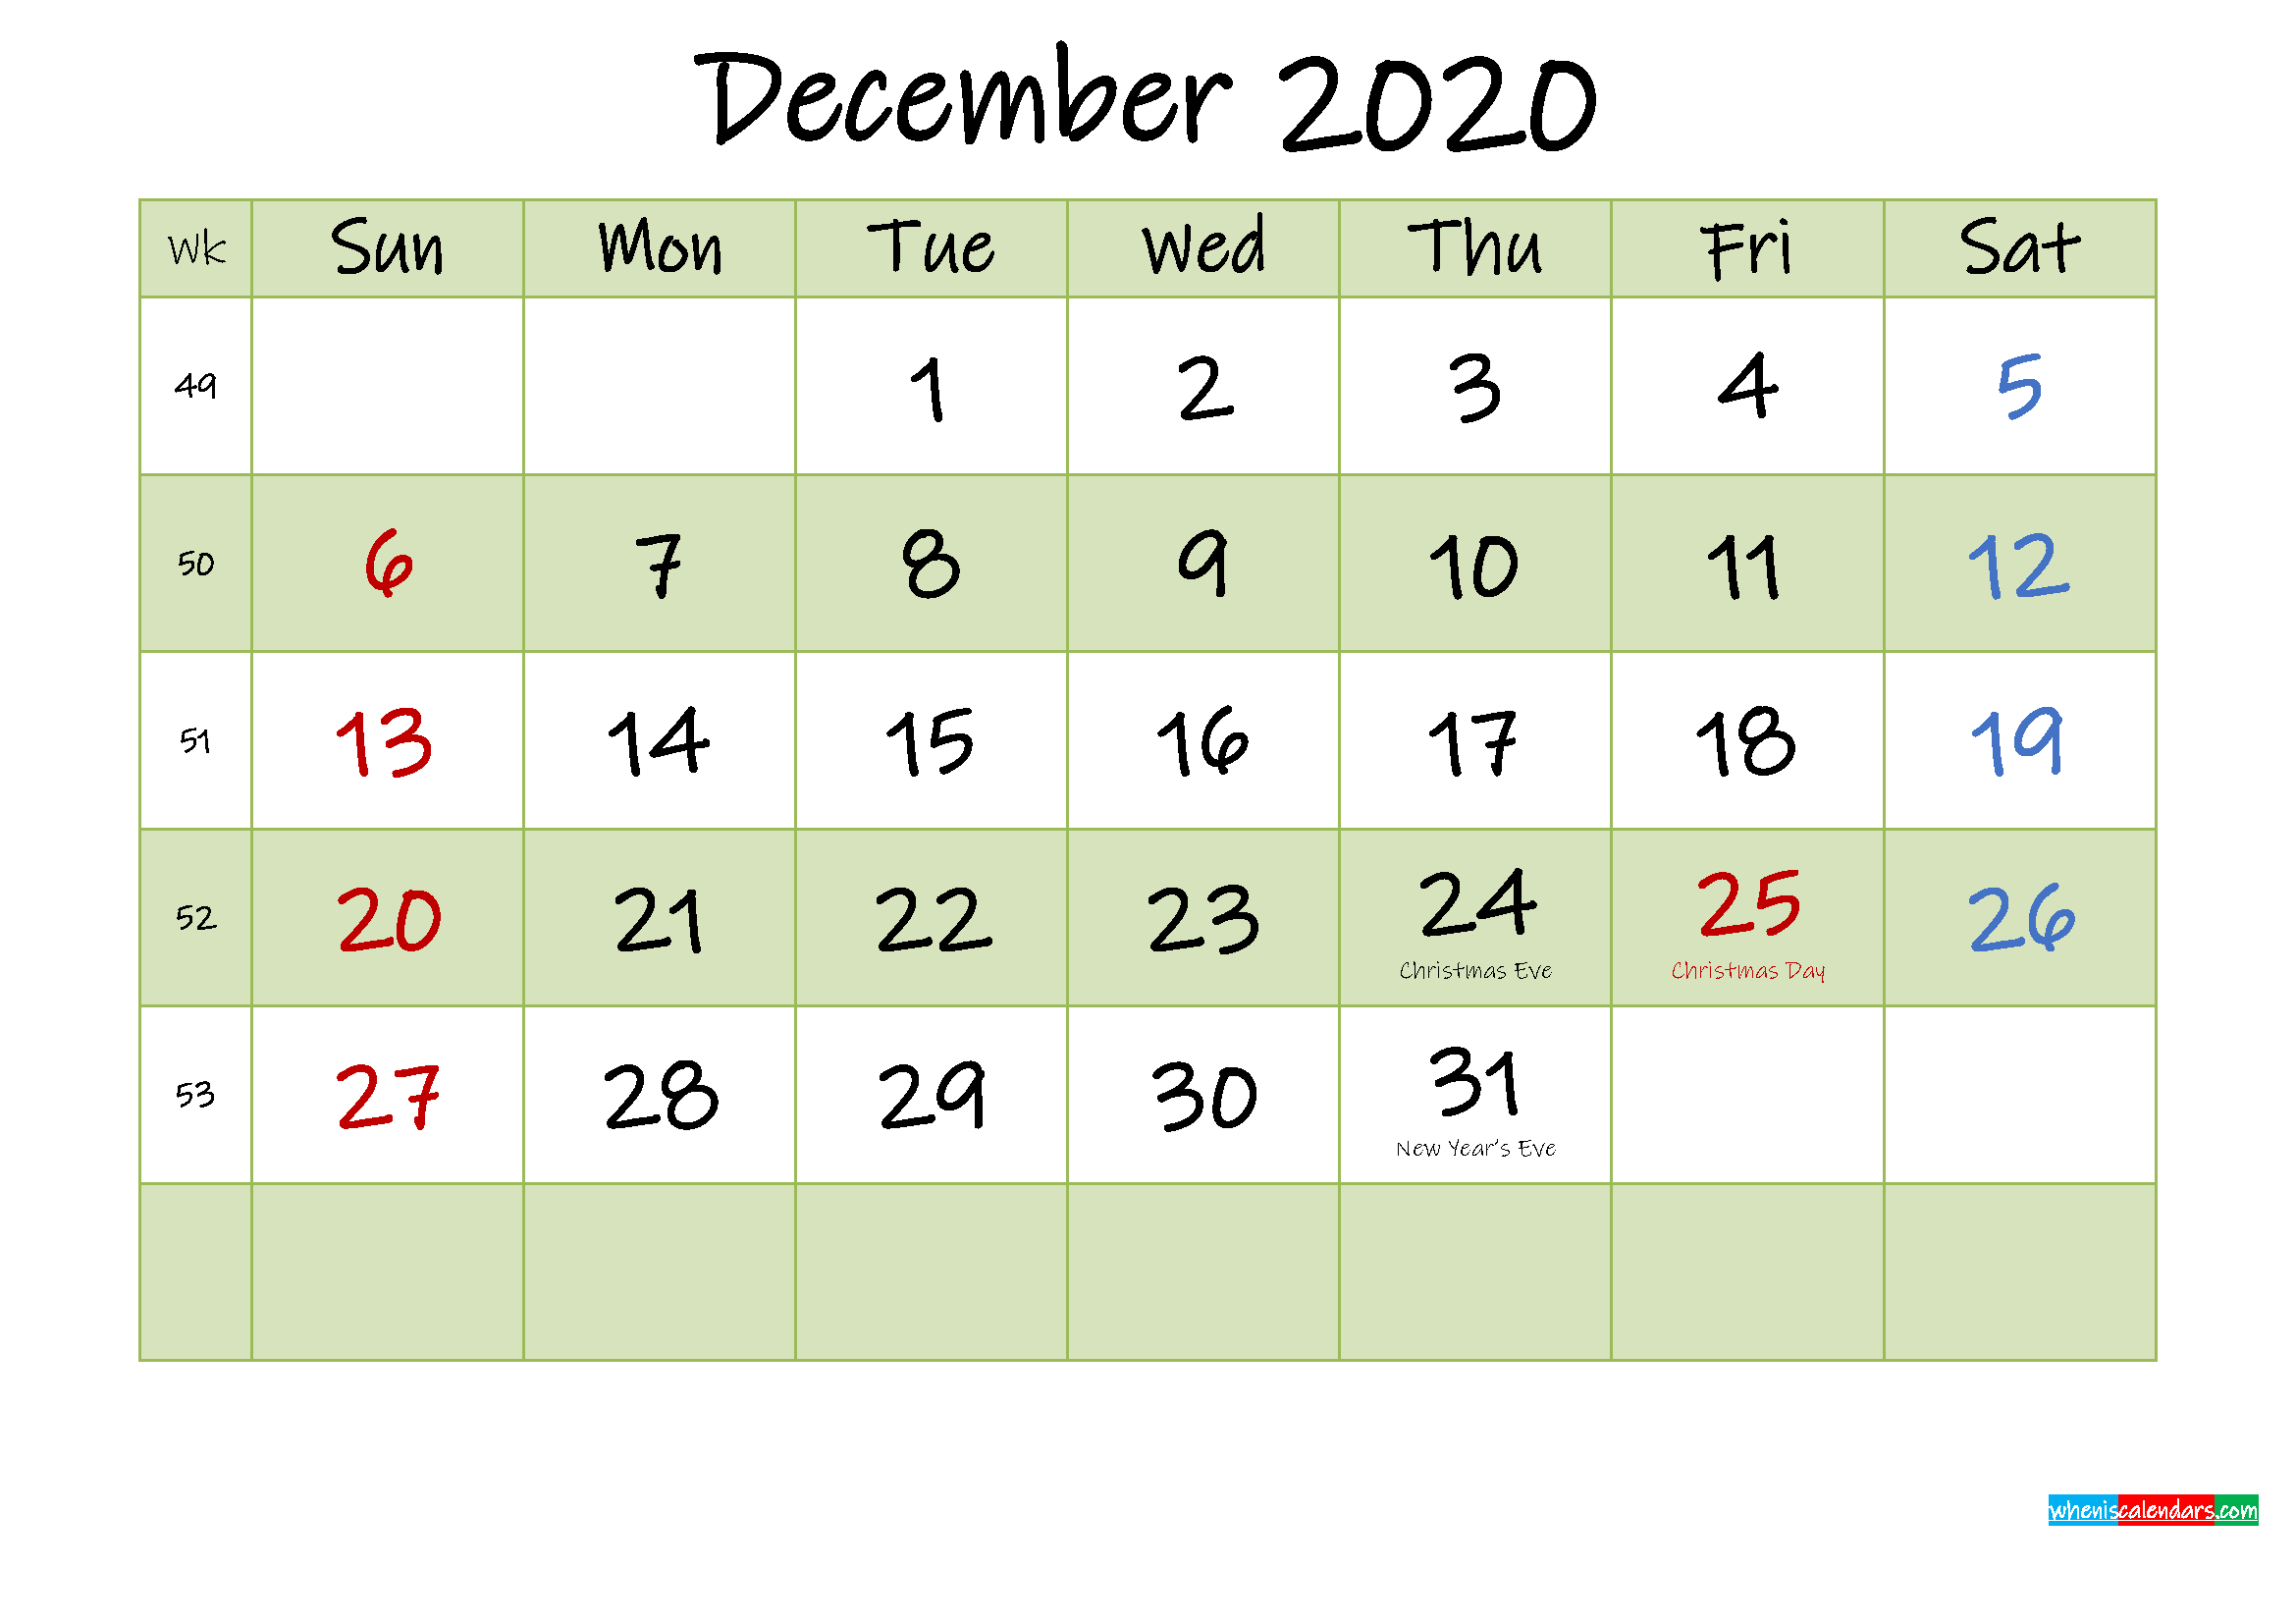 December 2020 Calendar With Holidays Printable - Template